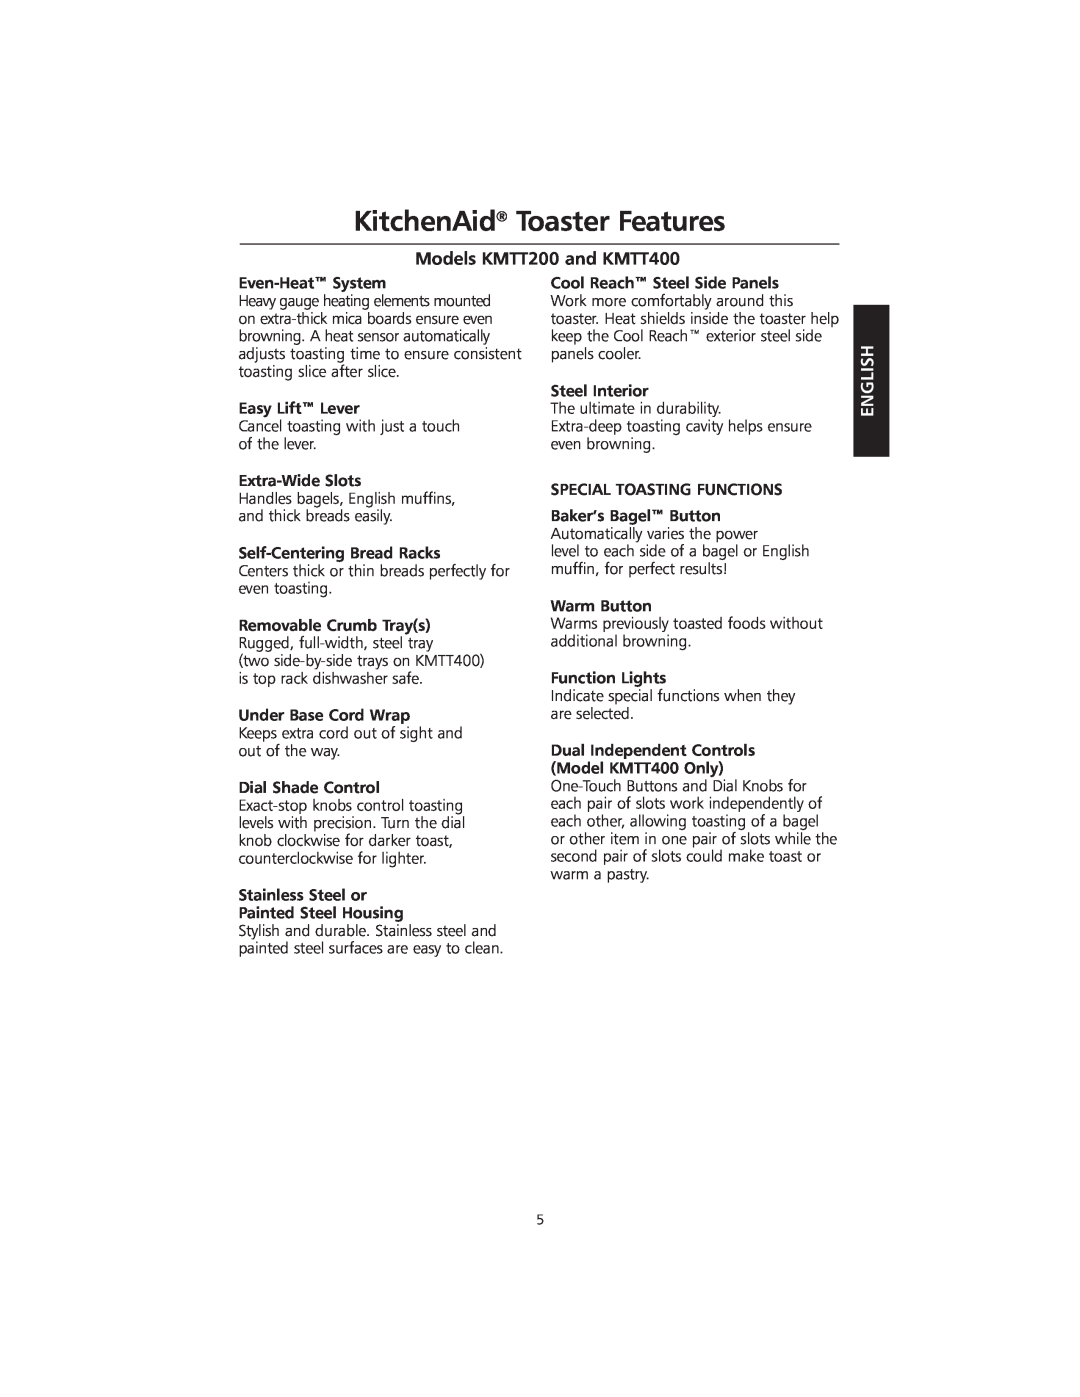 KitchenAid manual KitchenAid Toaster Features, Models KMTT200 and KMTT400, English 